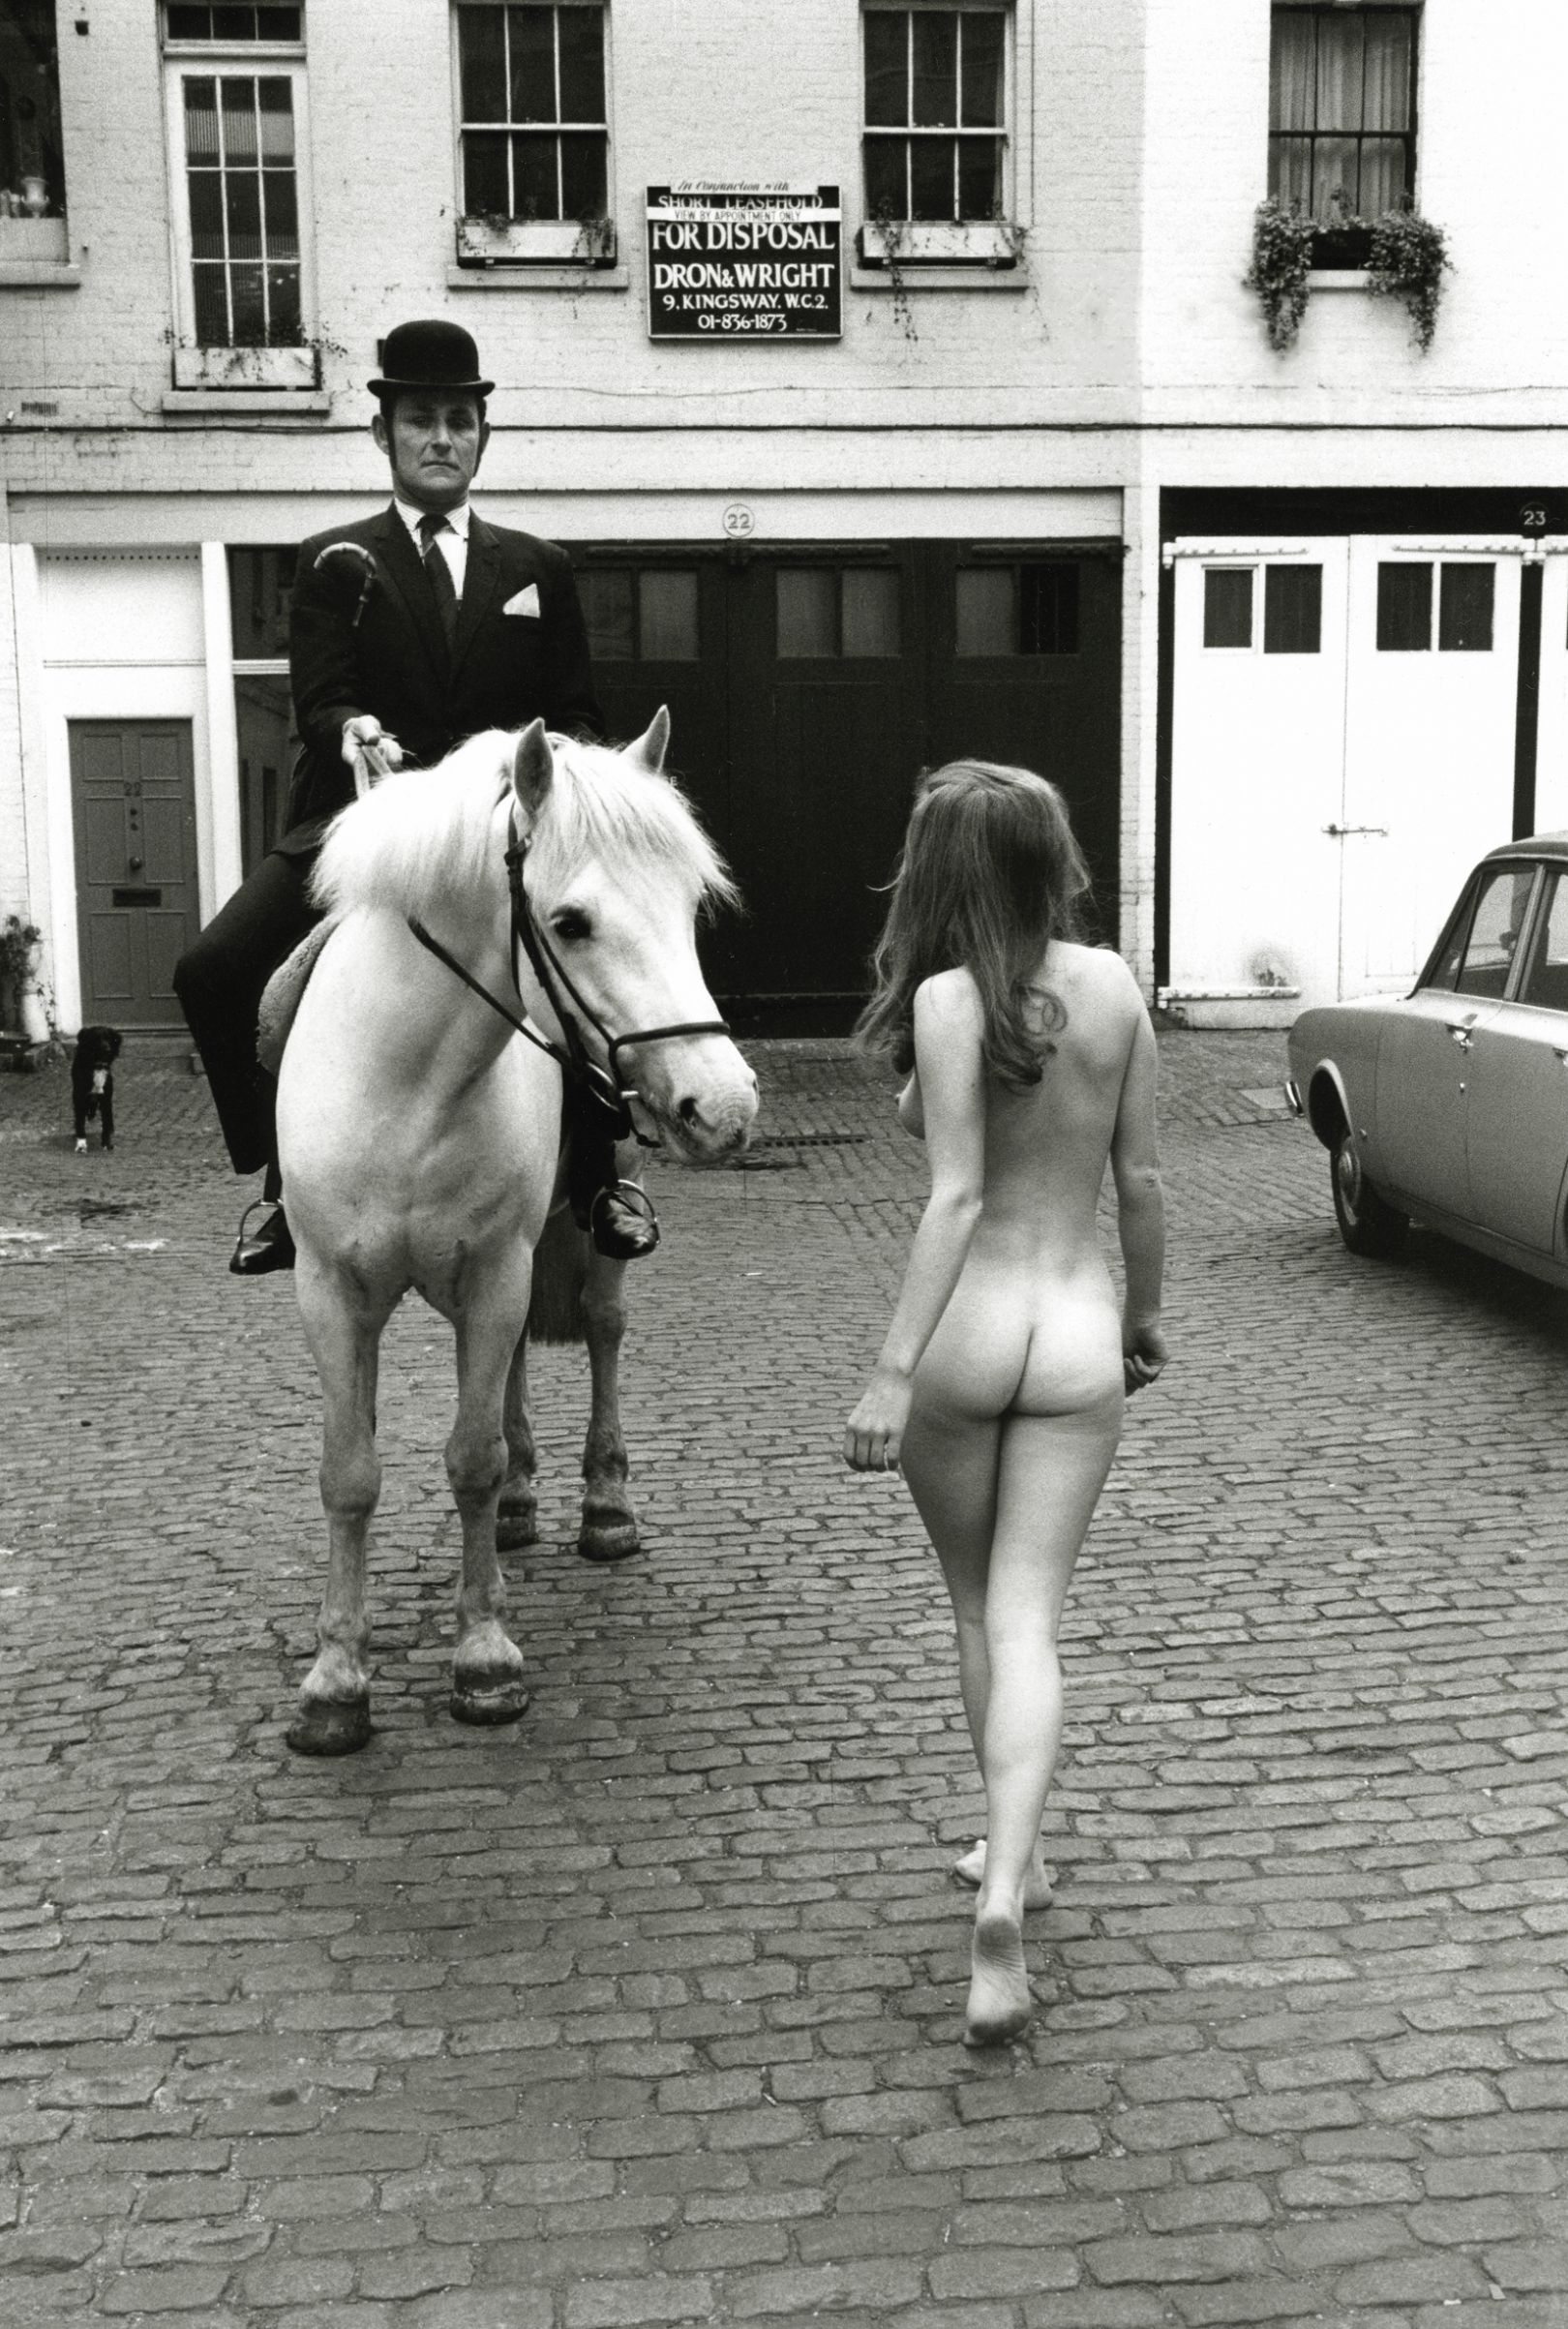 1960s London